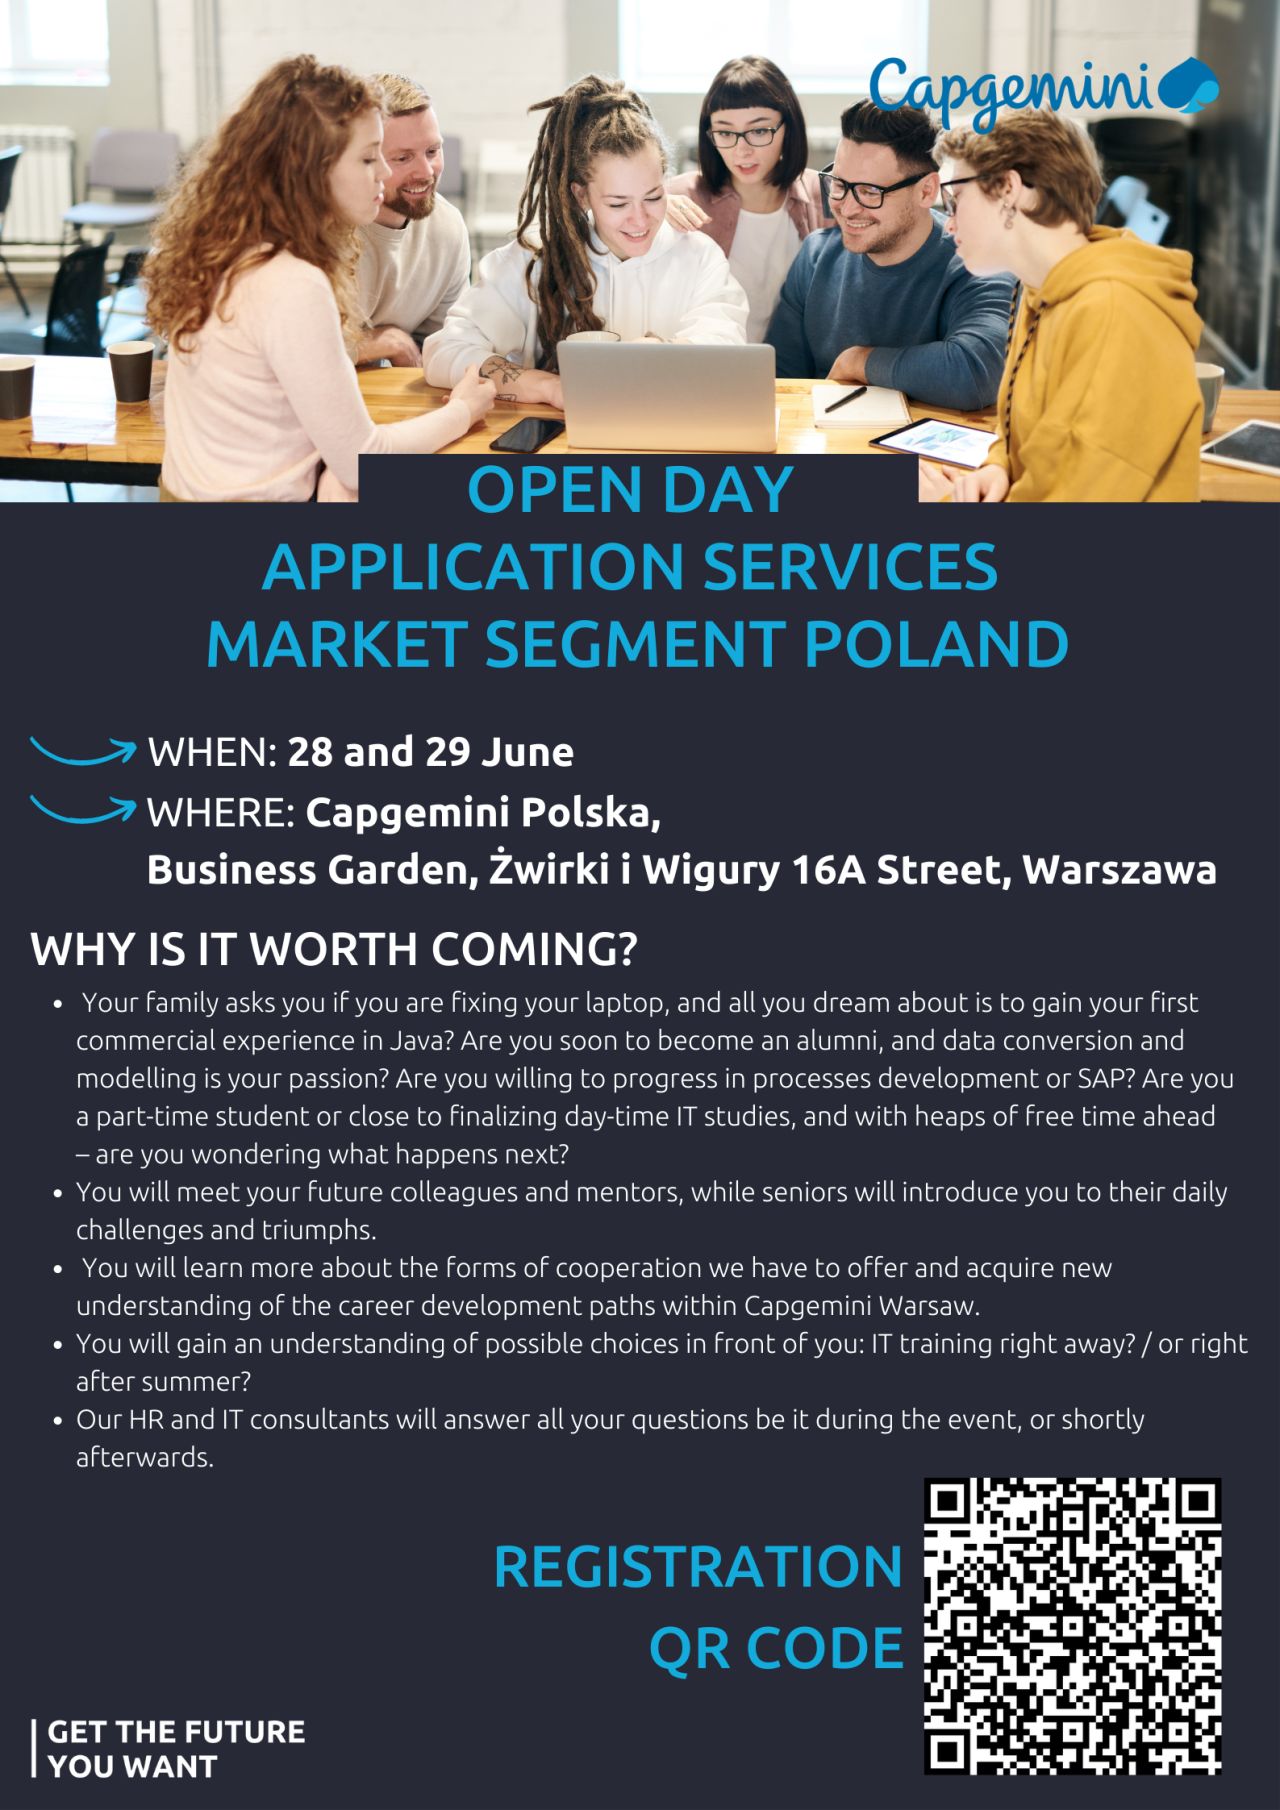 Capgemini Application Services Market Segment Poland - DNI OTWARTE / OPEN DAYS 